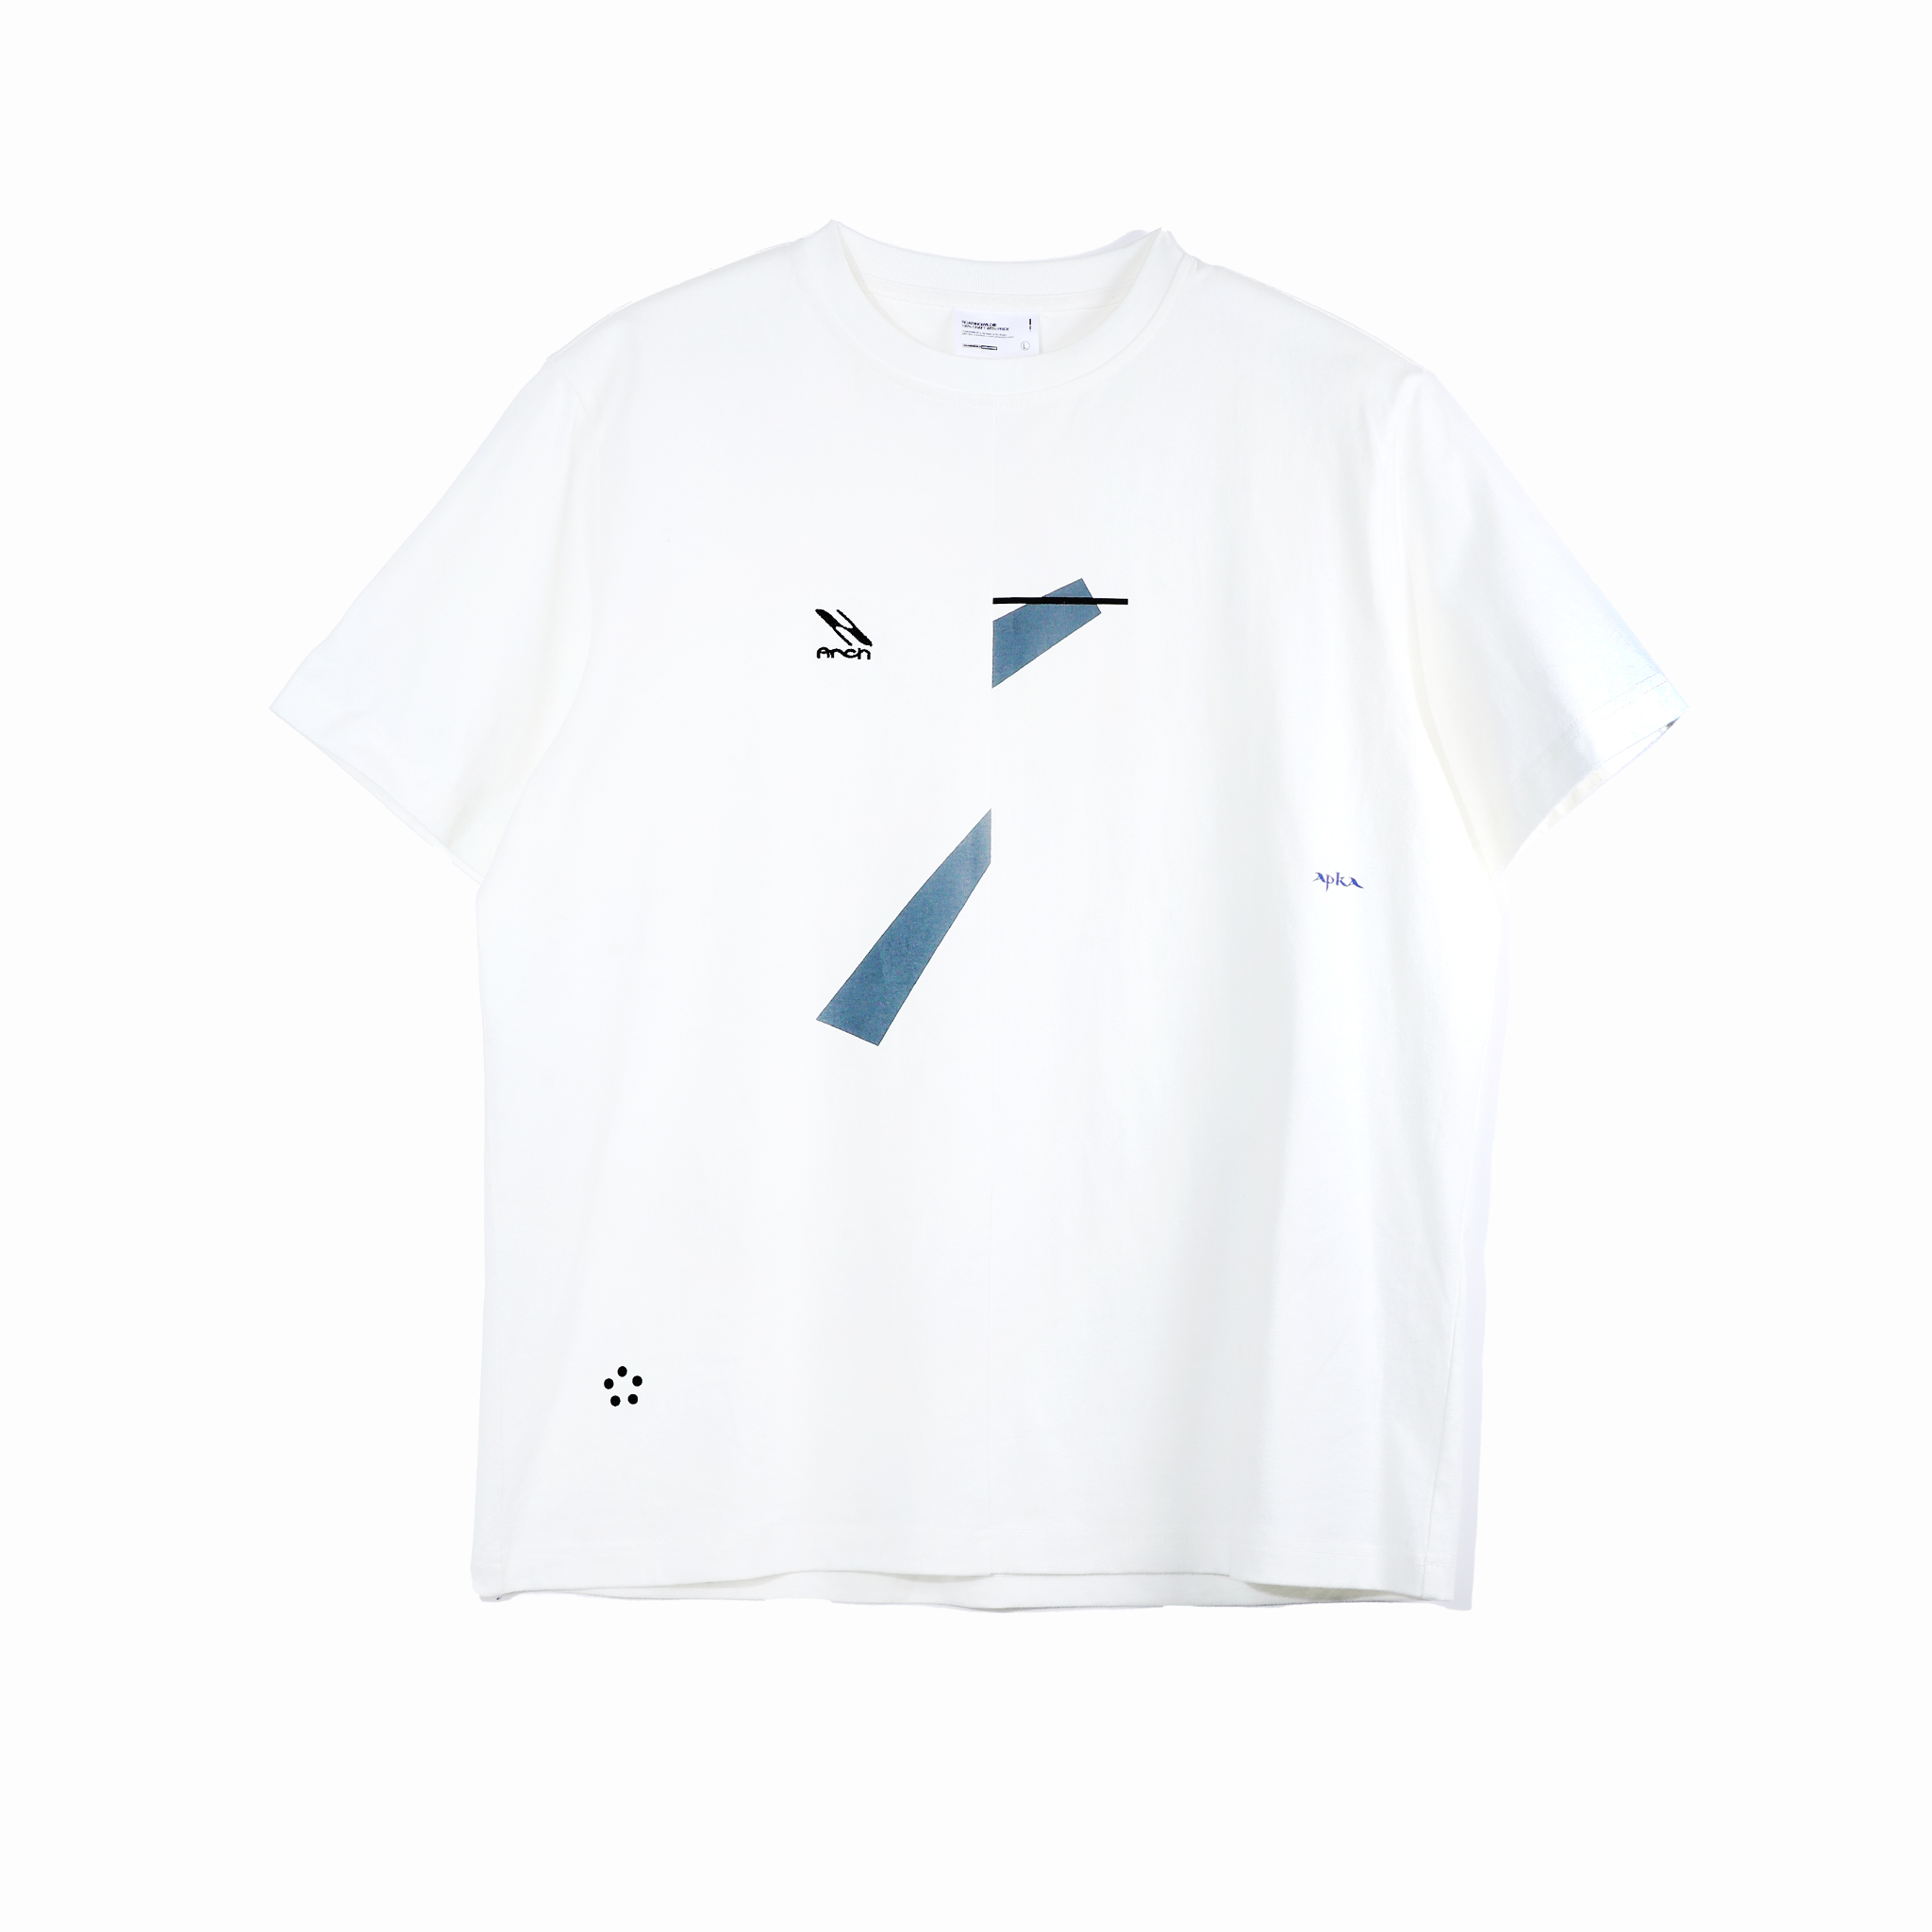 Mismatched Printed Short Sleeve T-Shirt White